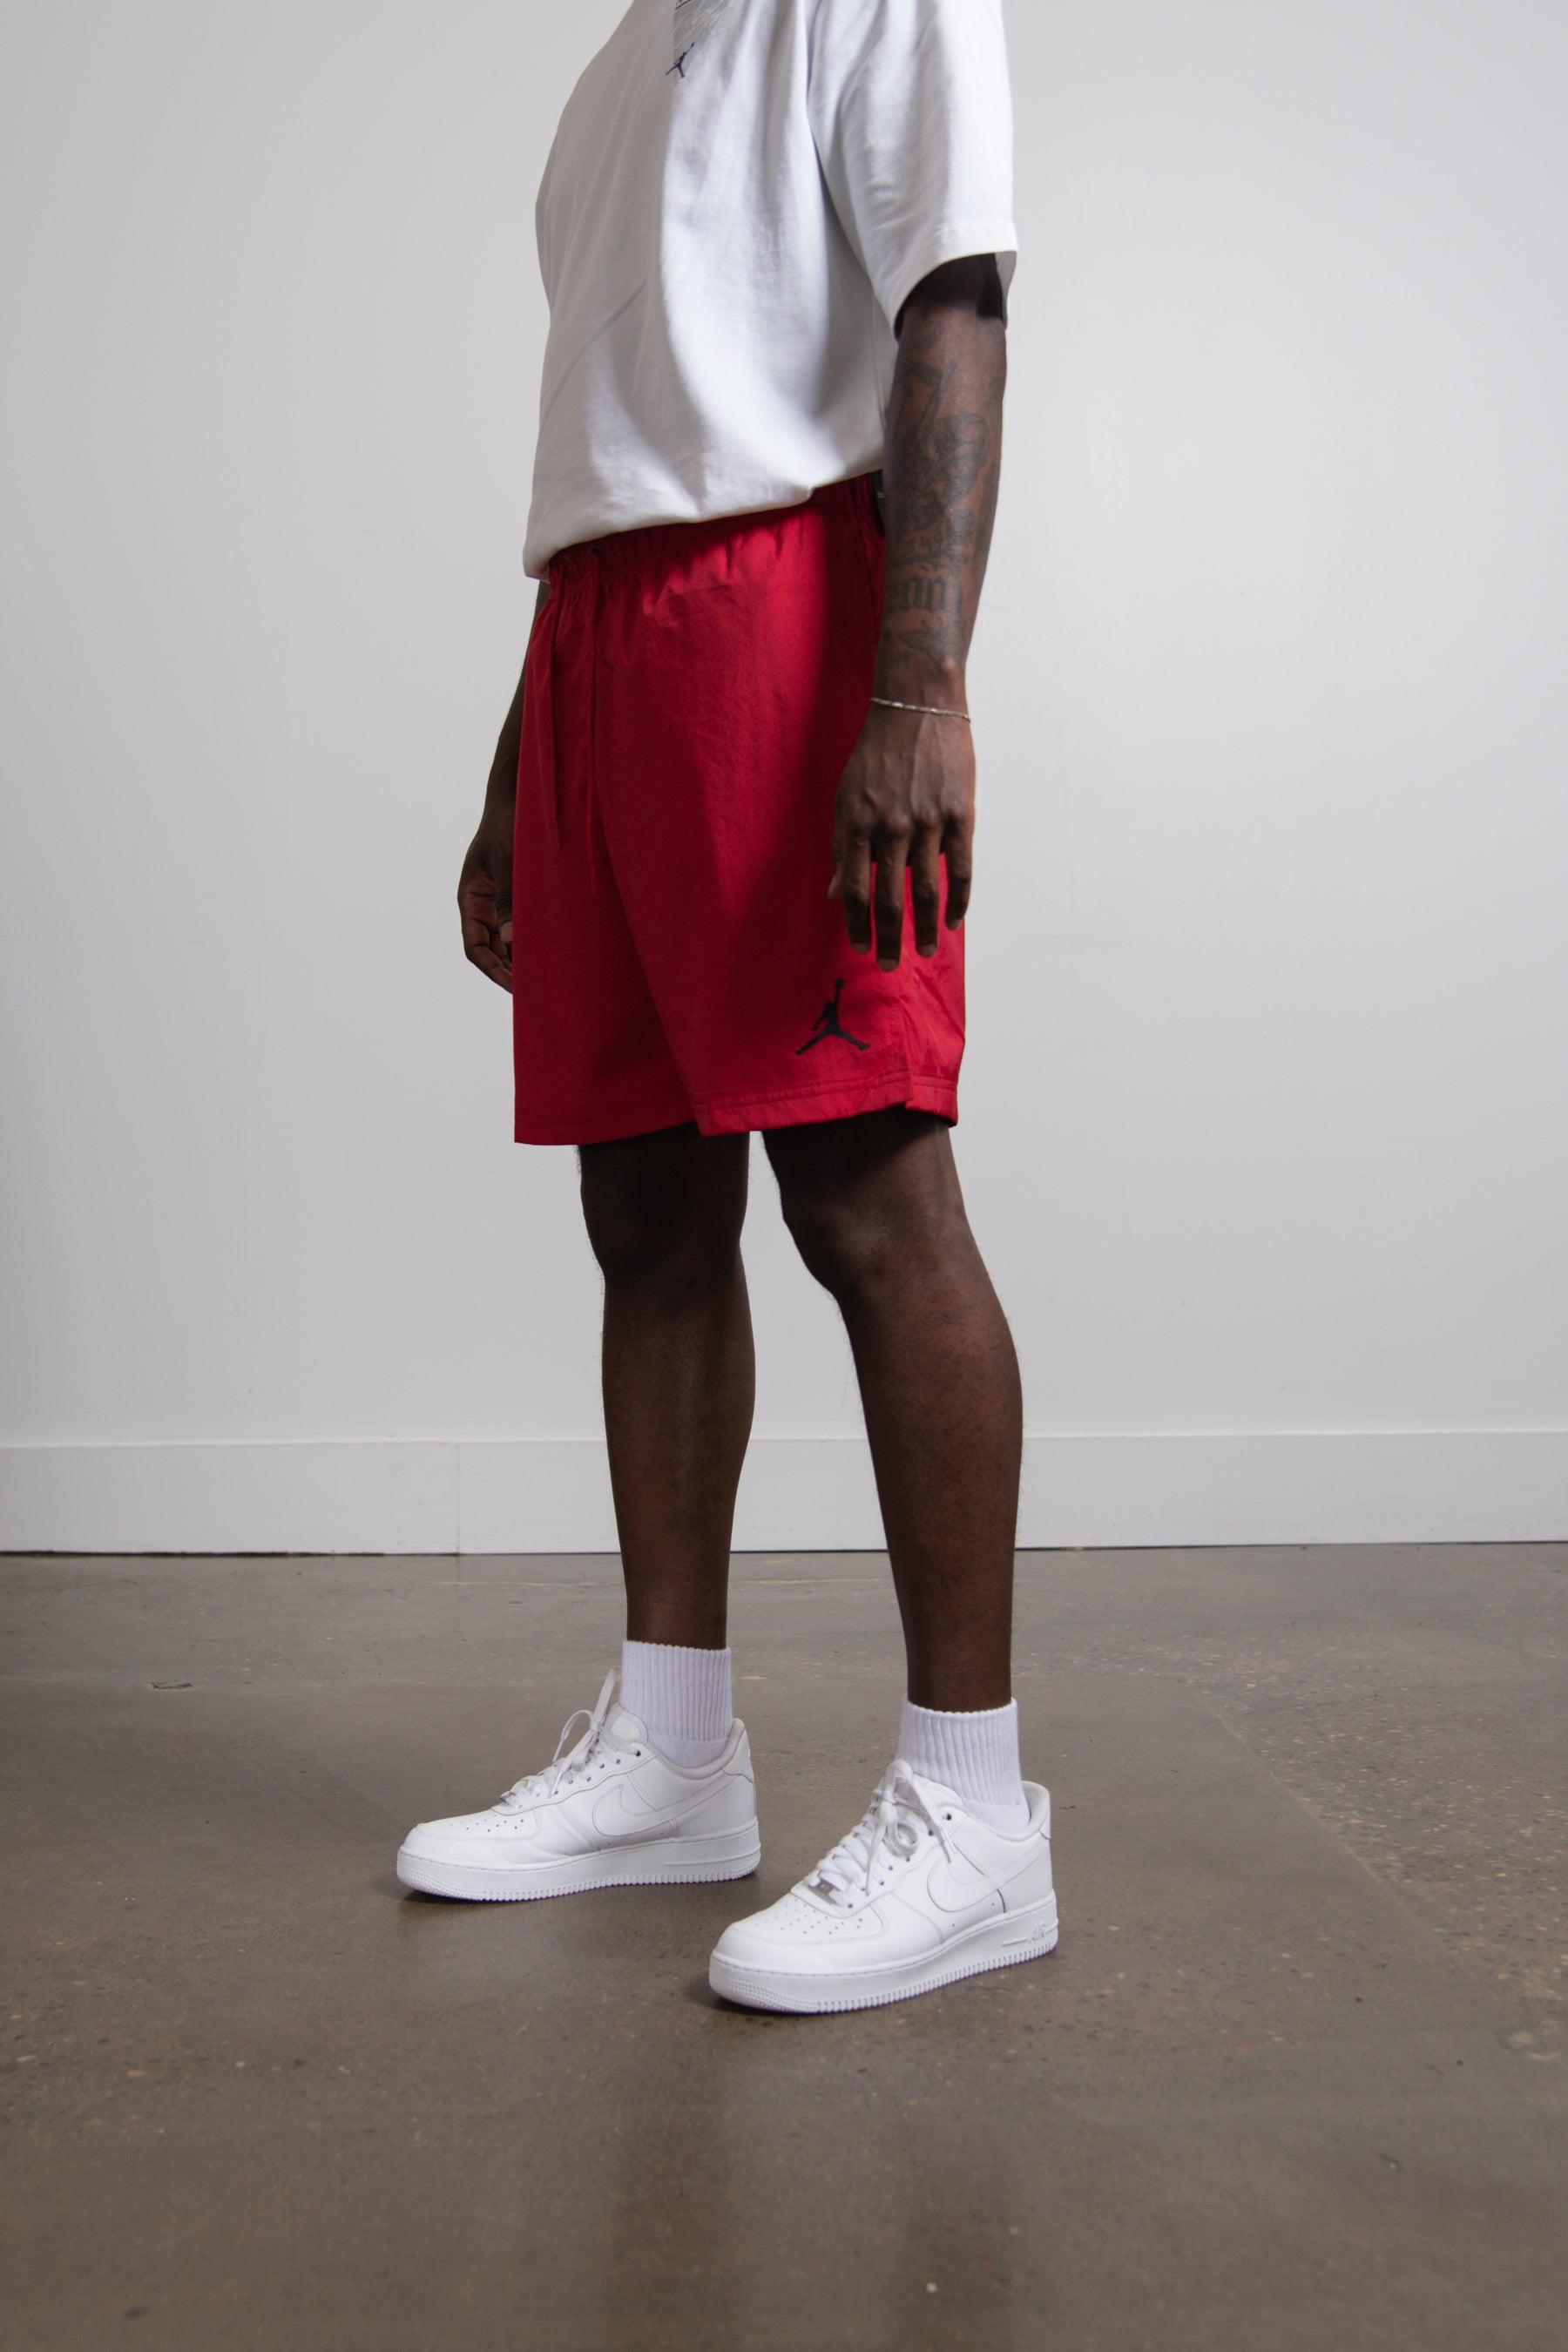 Jordan - Men - Mesh GFX Shorts - Gym Red/Black - Nohble